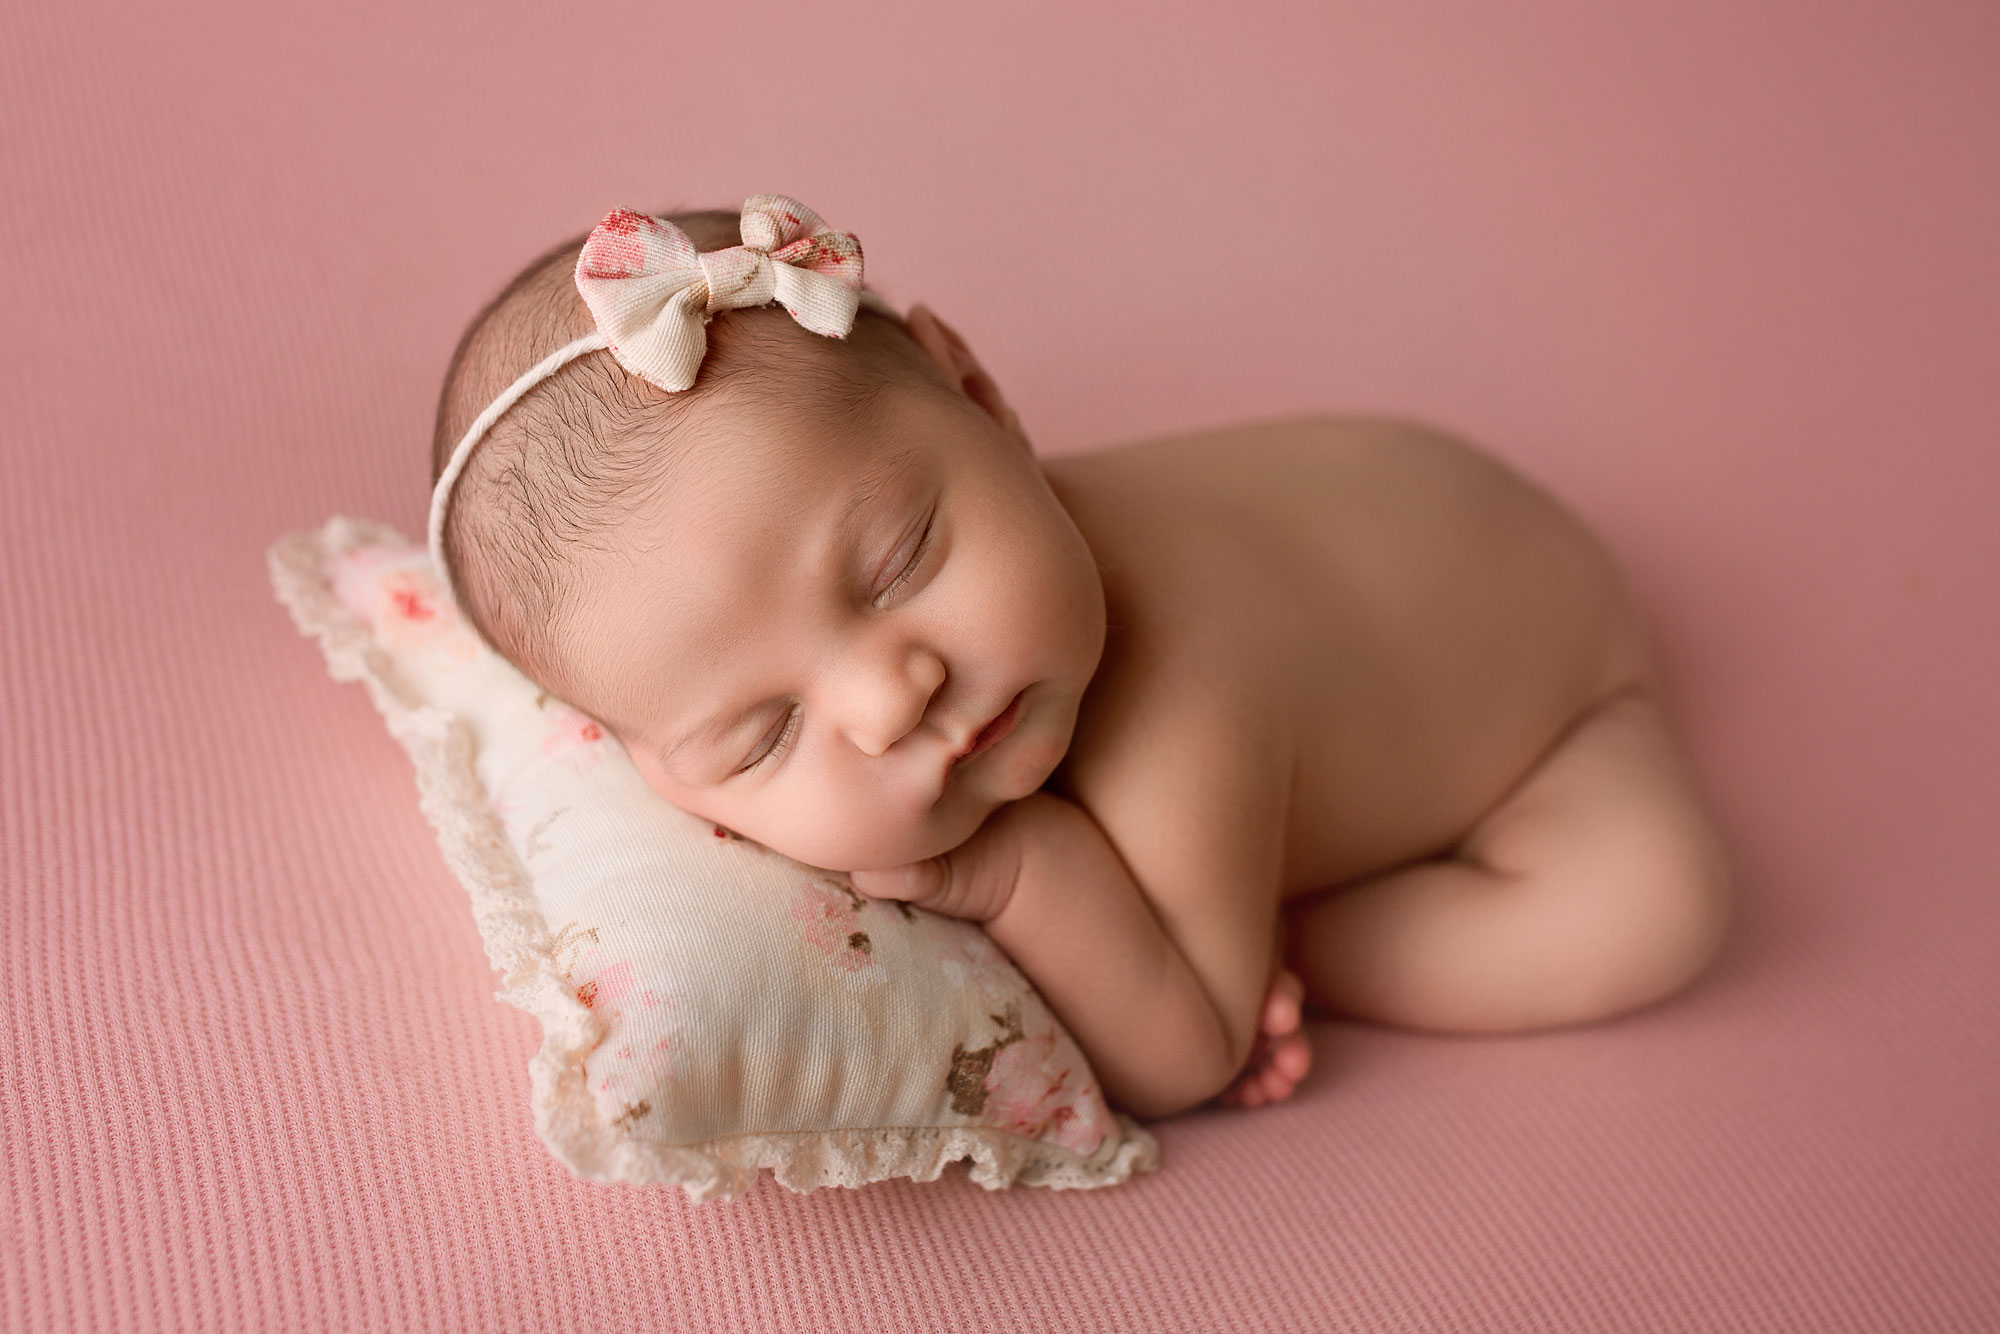 newborn baby on pink blanket Hunterdon county NJ baby photography session 